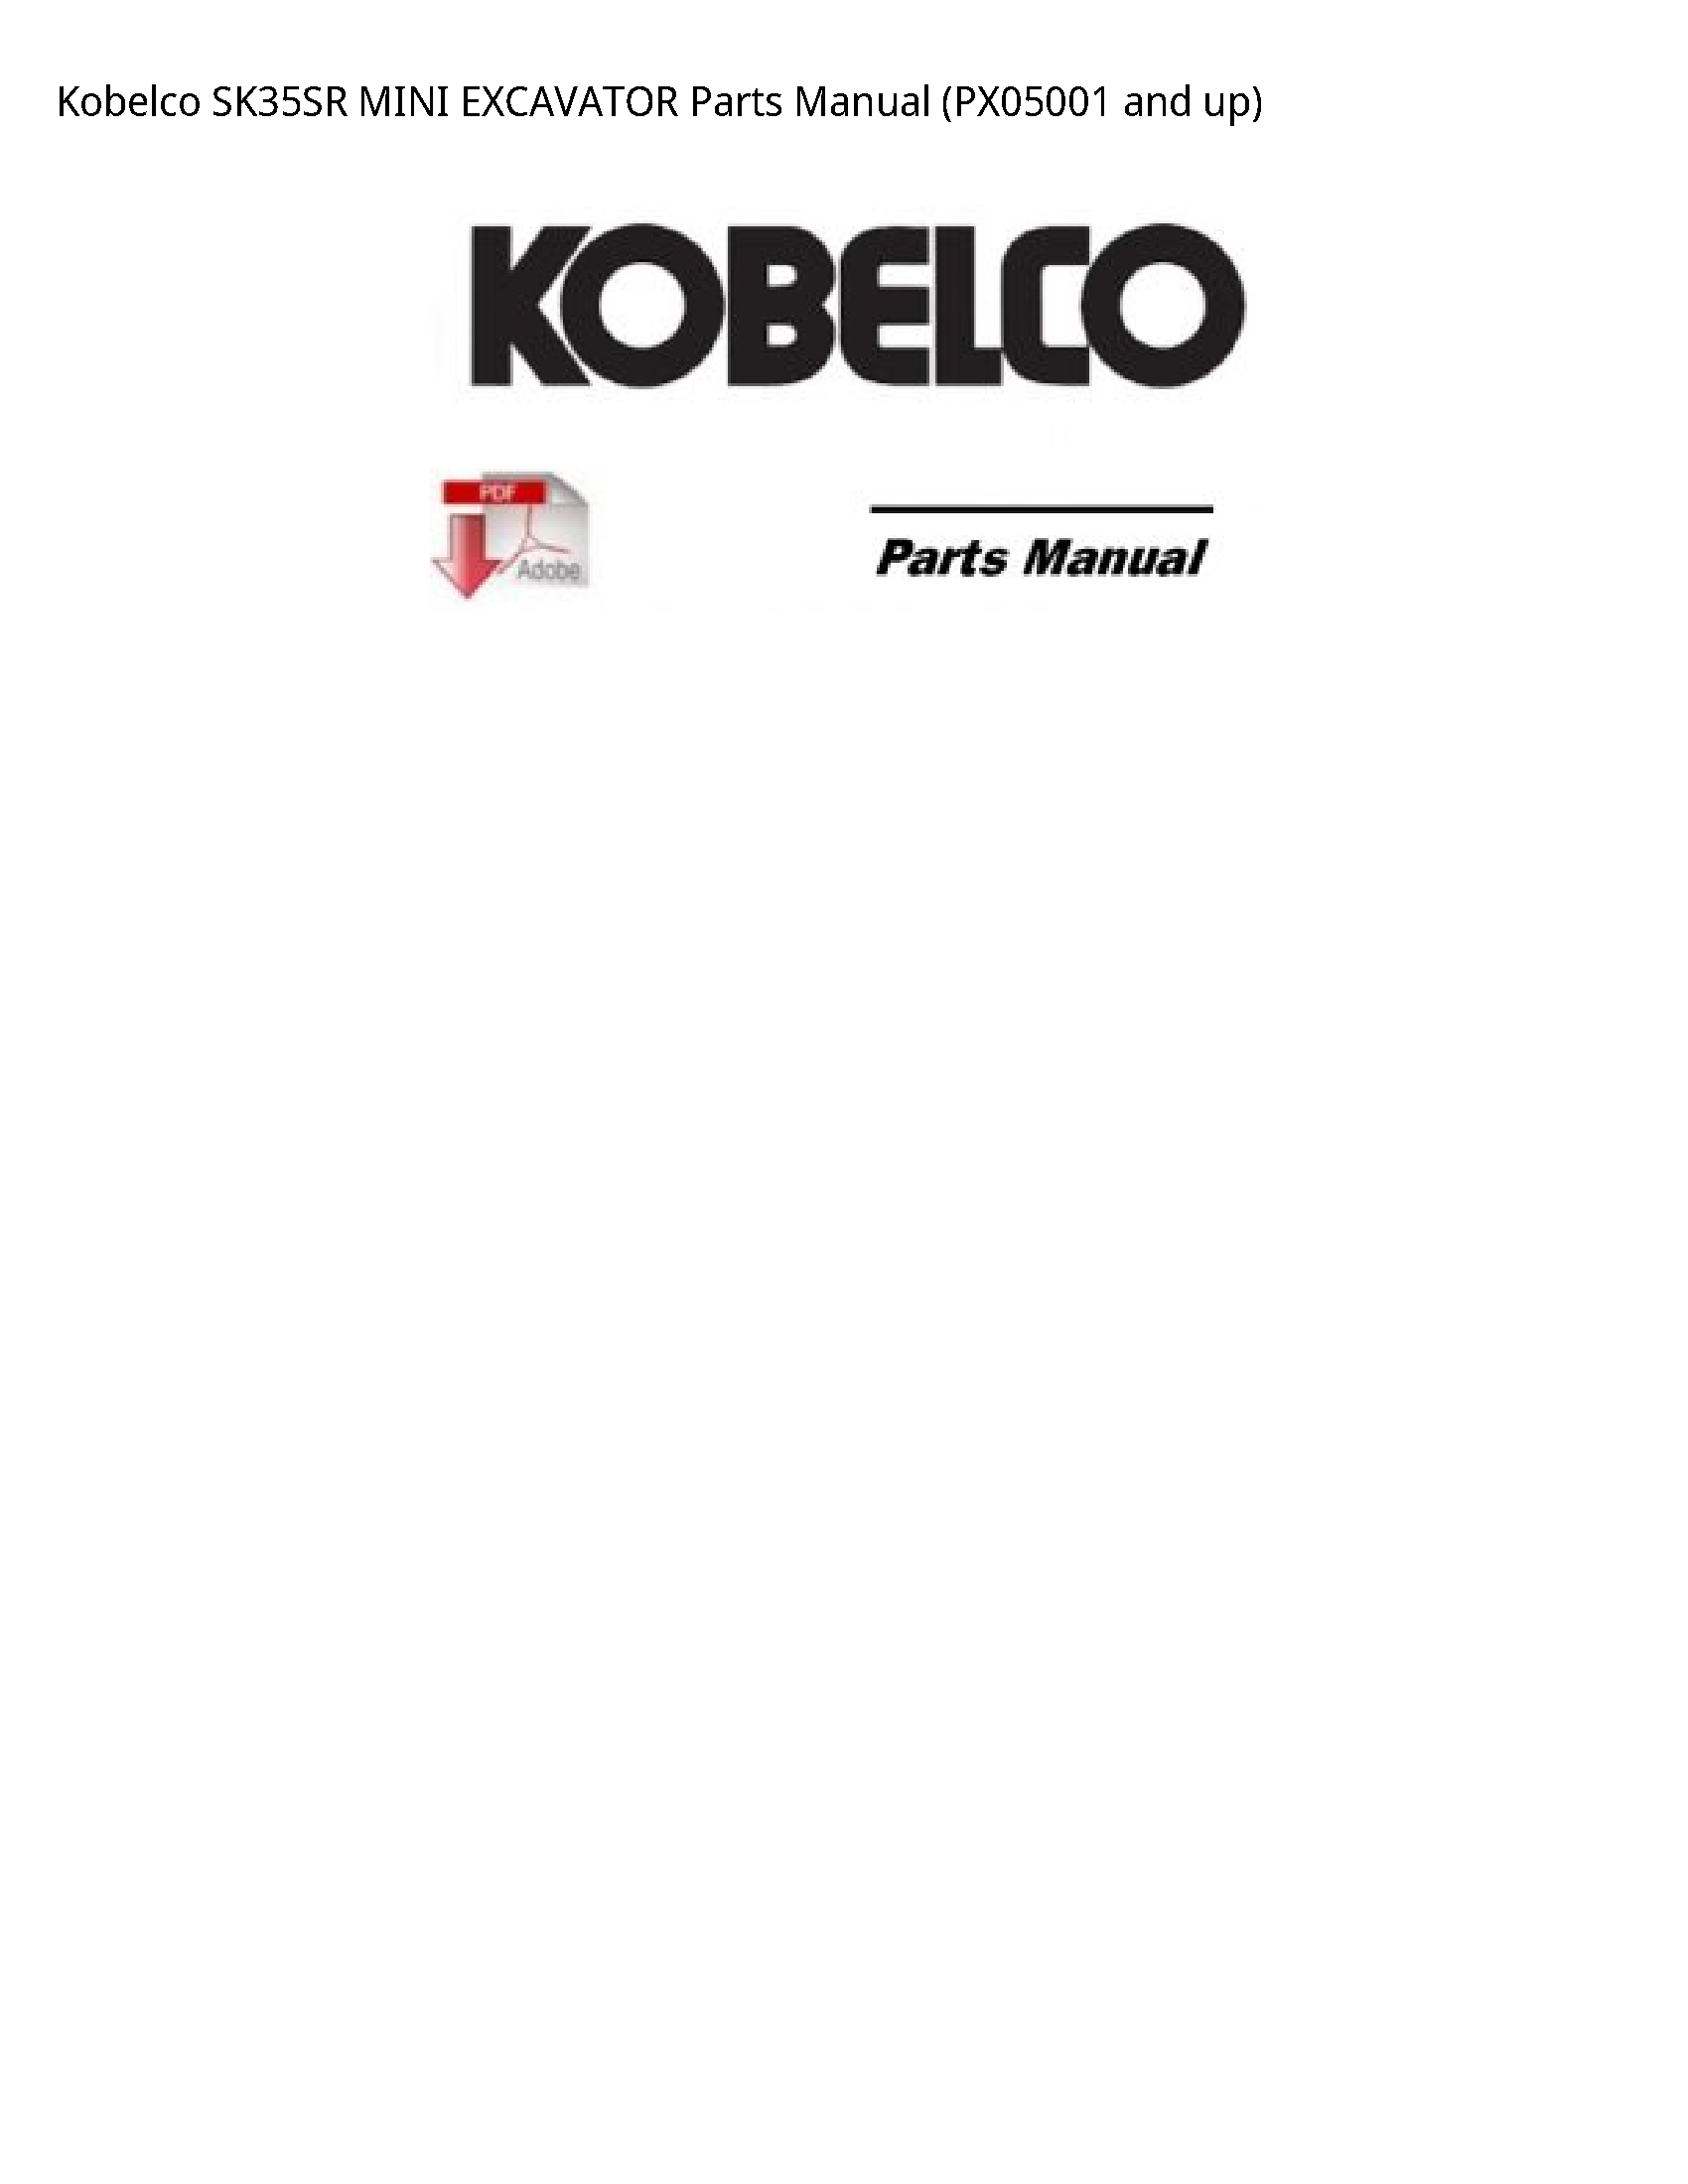 Kobelco SK35SR MINI EXCAVATOR Parts Manual (PX05001 and up)